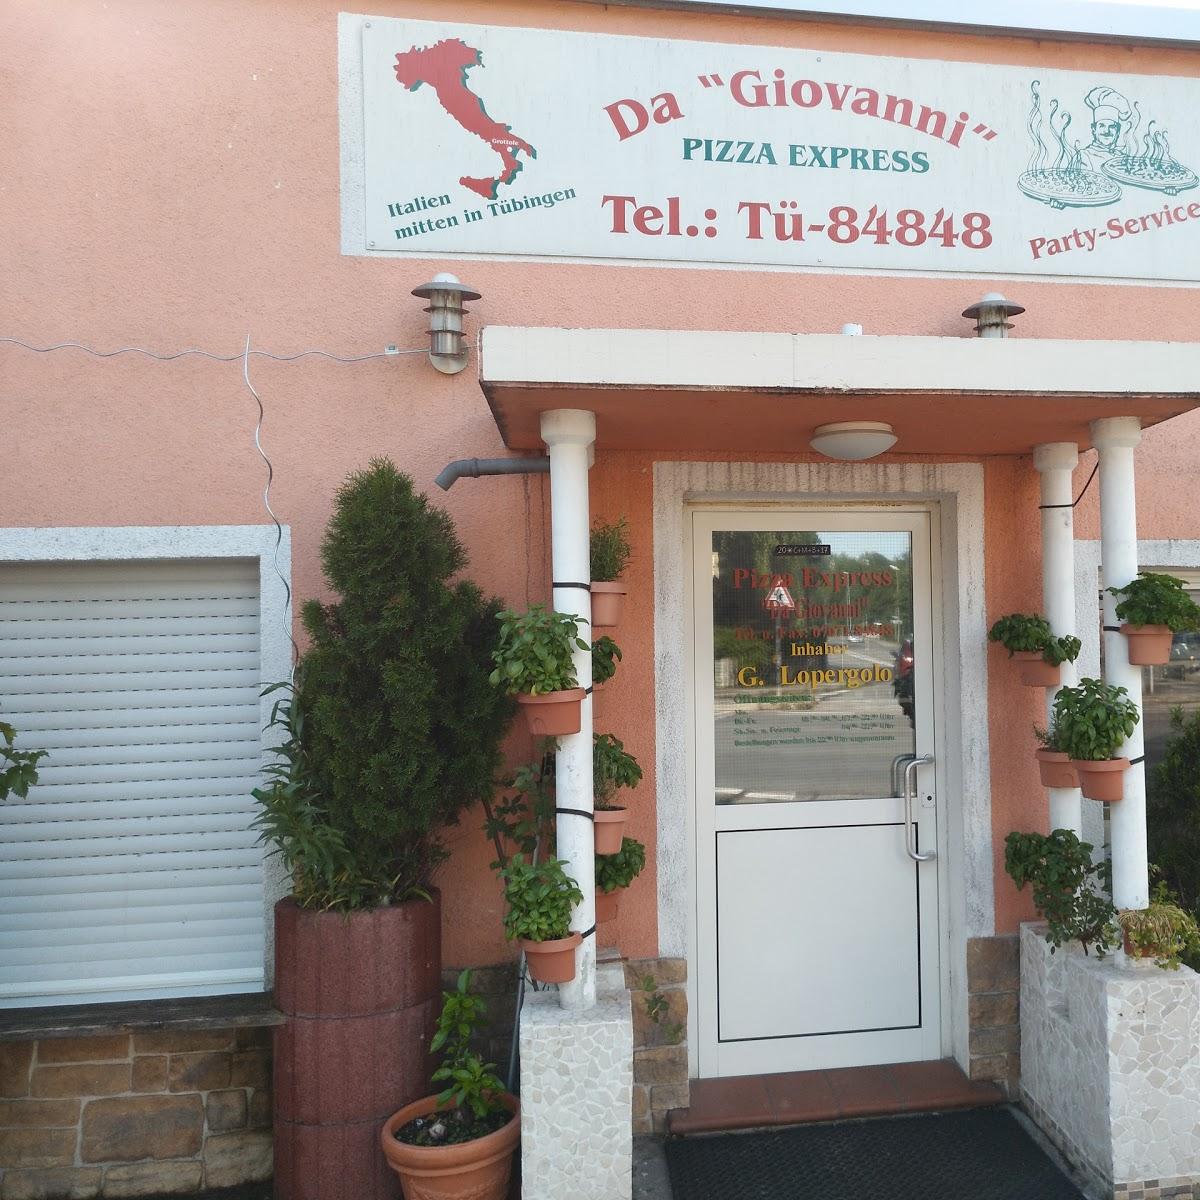 Restaurant "Pizzeria Da Giovanni" in Tübingen